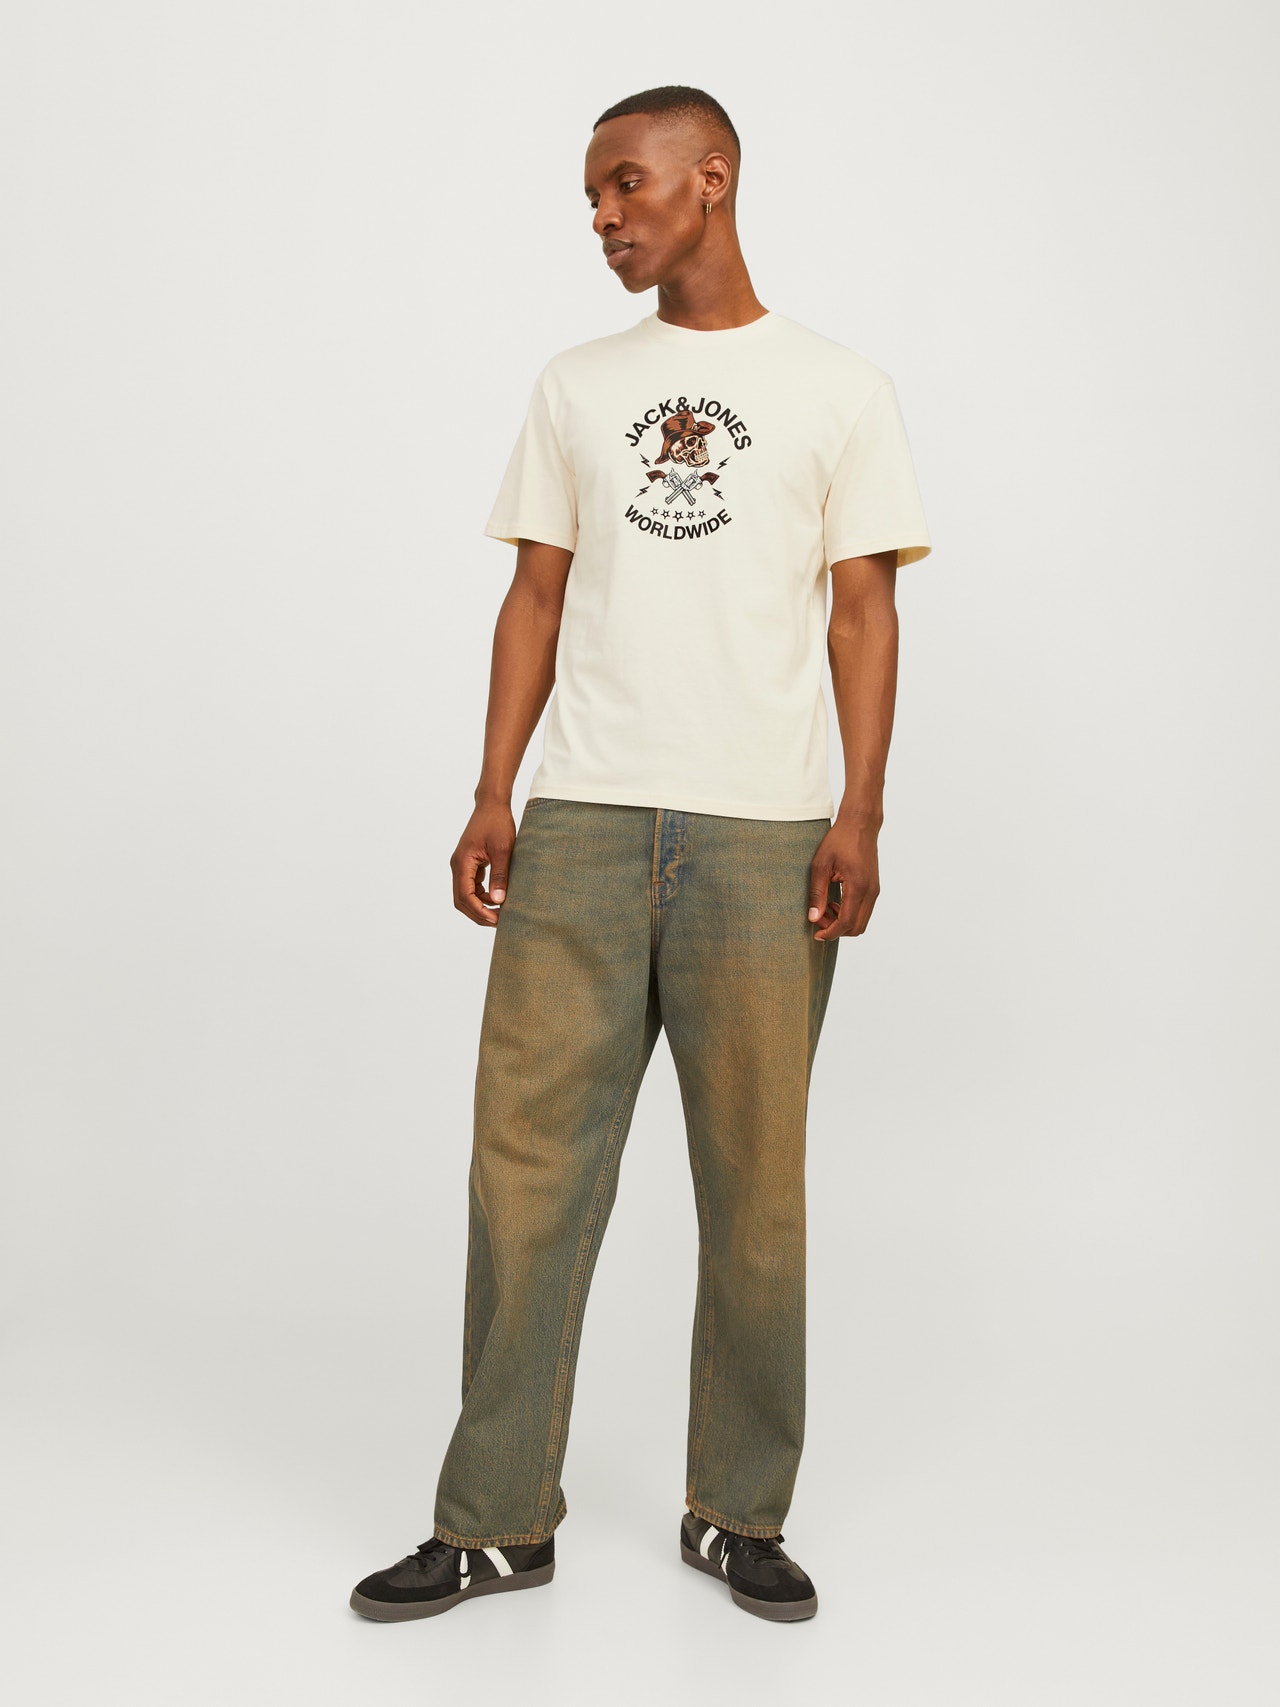 Jack & Jones T-shirt Estampar Decote Redondo -Buttercream - 12262491